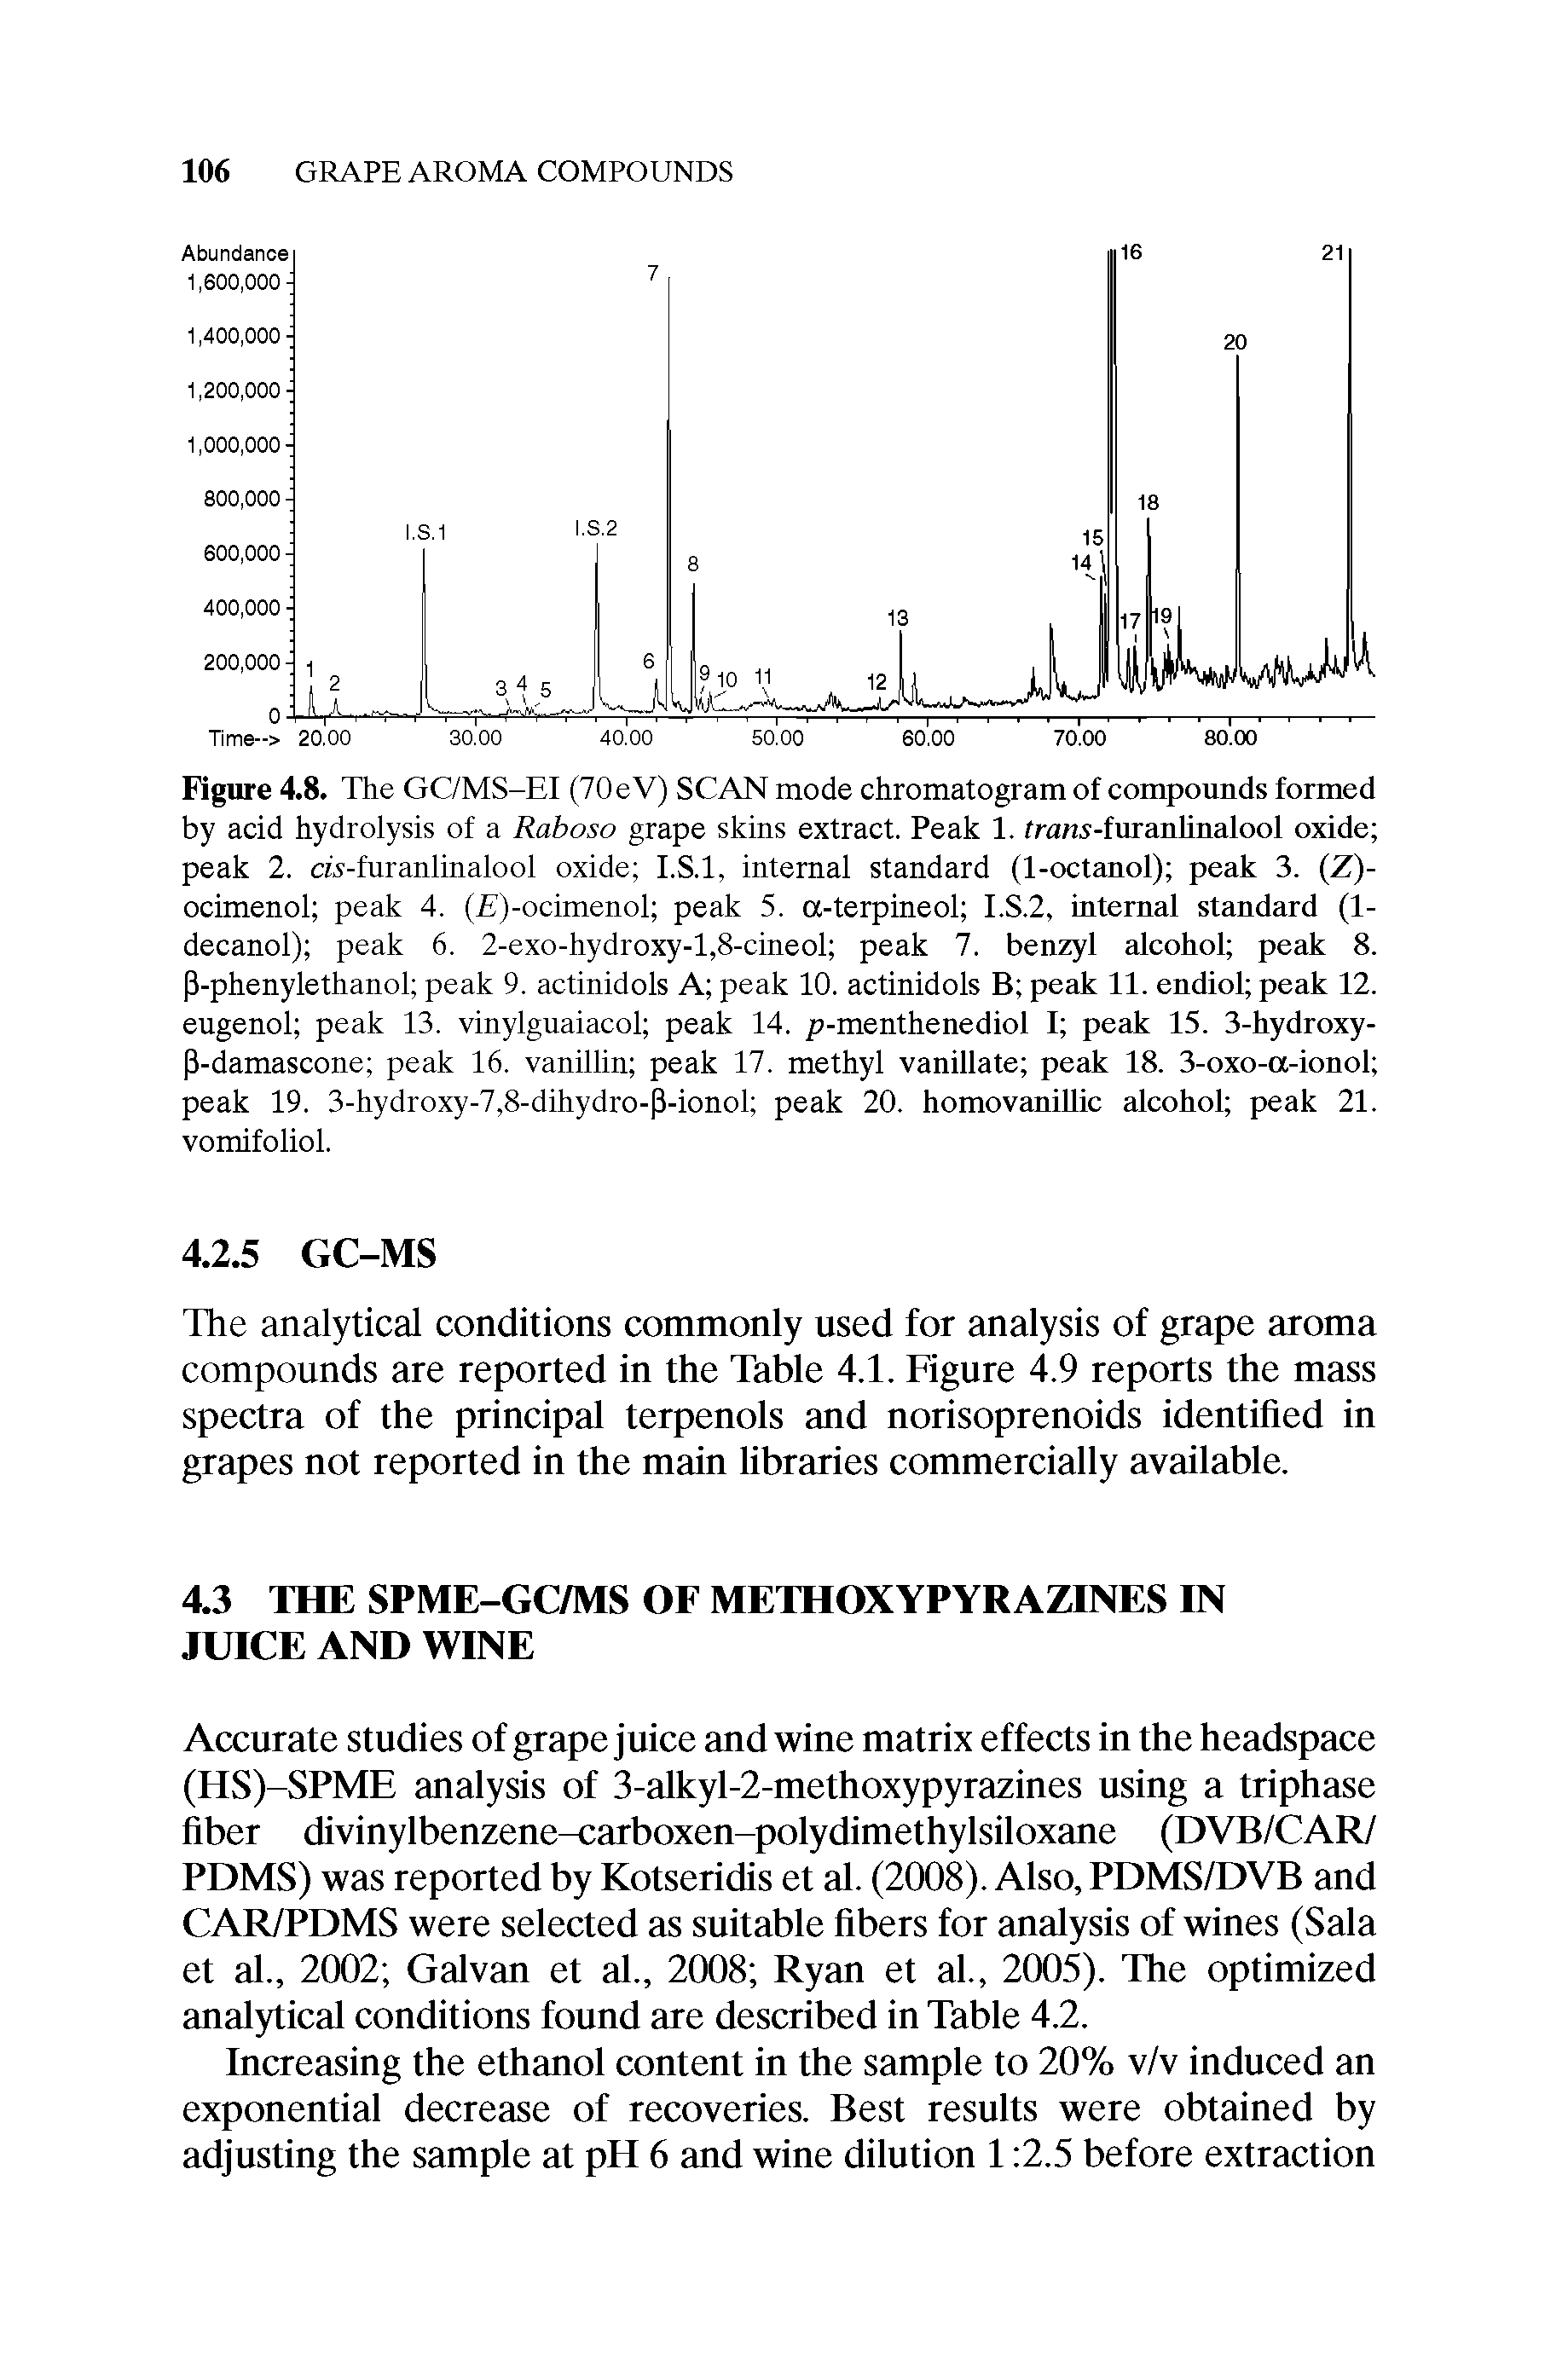 Figure 4.8. The GC/MS-EI (70eV) SCAN mode chromatogram of compounds formed by acid hydrolysis of a Raboso grape skins extract. Peak 1. frans-furanlinalool oxide peak 2. cfs-furanlinalool oxide I.S.l, internal standard (1-octanol) peak 3. (Z)-ocimenol peak 4. ( )-ocimenol peak 5. a-terpineol I.S.2, internal standard (1-decanol) peak 6. 2-exo-hydroxy-l,8-cineol peak 7. benzyl alcohol peak 8. P-phenylethanol peak 9. actinidols A peak 10. actinidols B peak 11. endiol peak 12. eugenol peak 13. vinylguaiacol peak 14. p-menthenediol I peak 15. 3-hydroxy-P-damascone peak 16. vanillin peak 17. methyl vanillate peak 18. 3-oxo-a-ionol peak 19. 3-hydroxy-7,8-dihydro-P-ionol peak 20. homovanillic alcohol peak 21. vomifoliol.